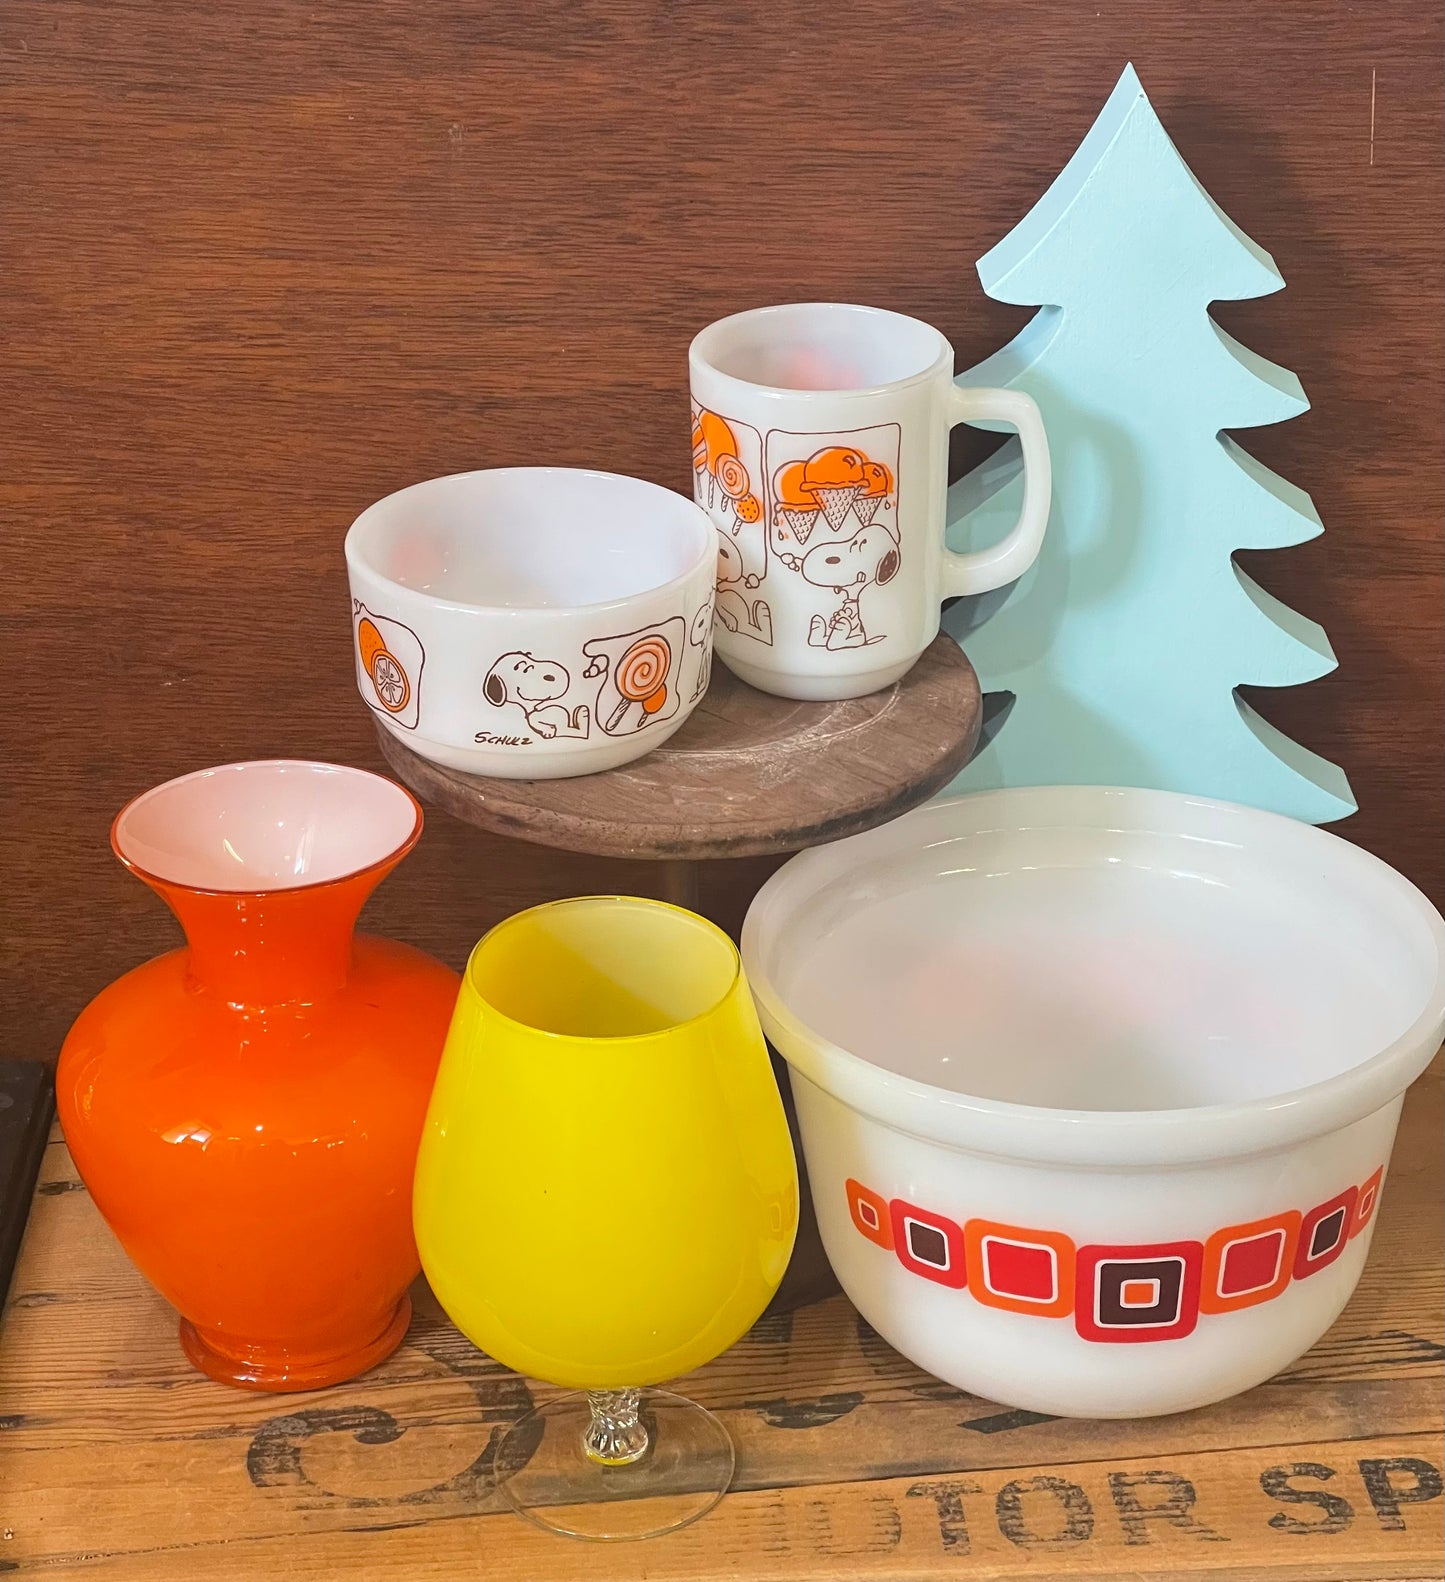 SNOOPY Peanuts vintage mug and bowl set Fire King Anchor Hocking USA white milk glass rare